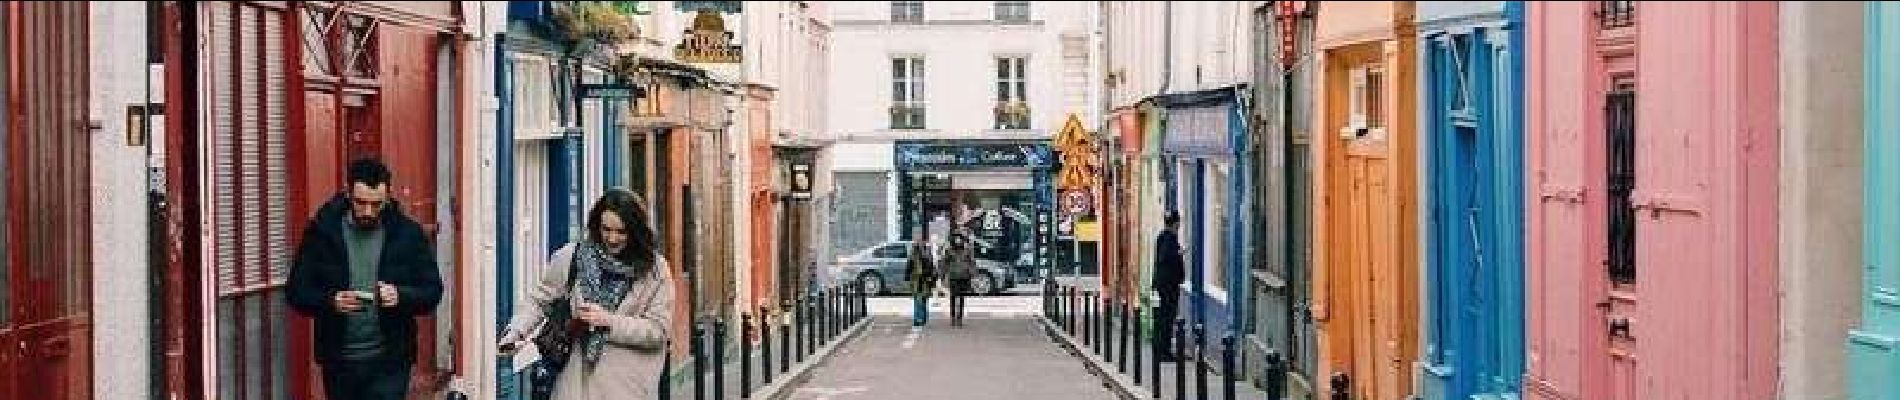 POI Paris - Rue sainte Marthe - Photo